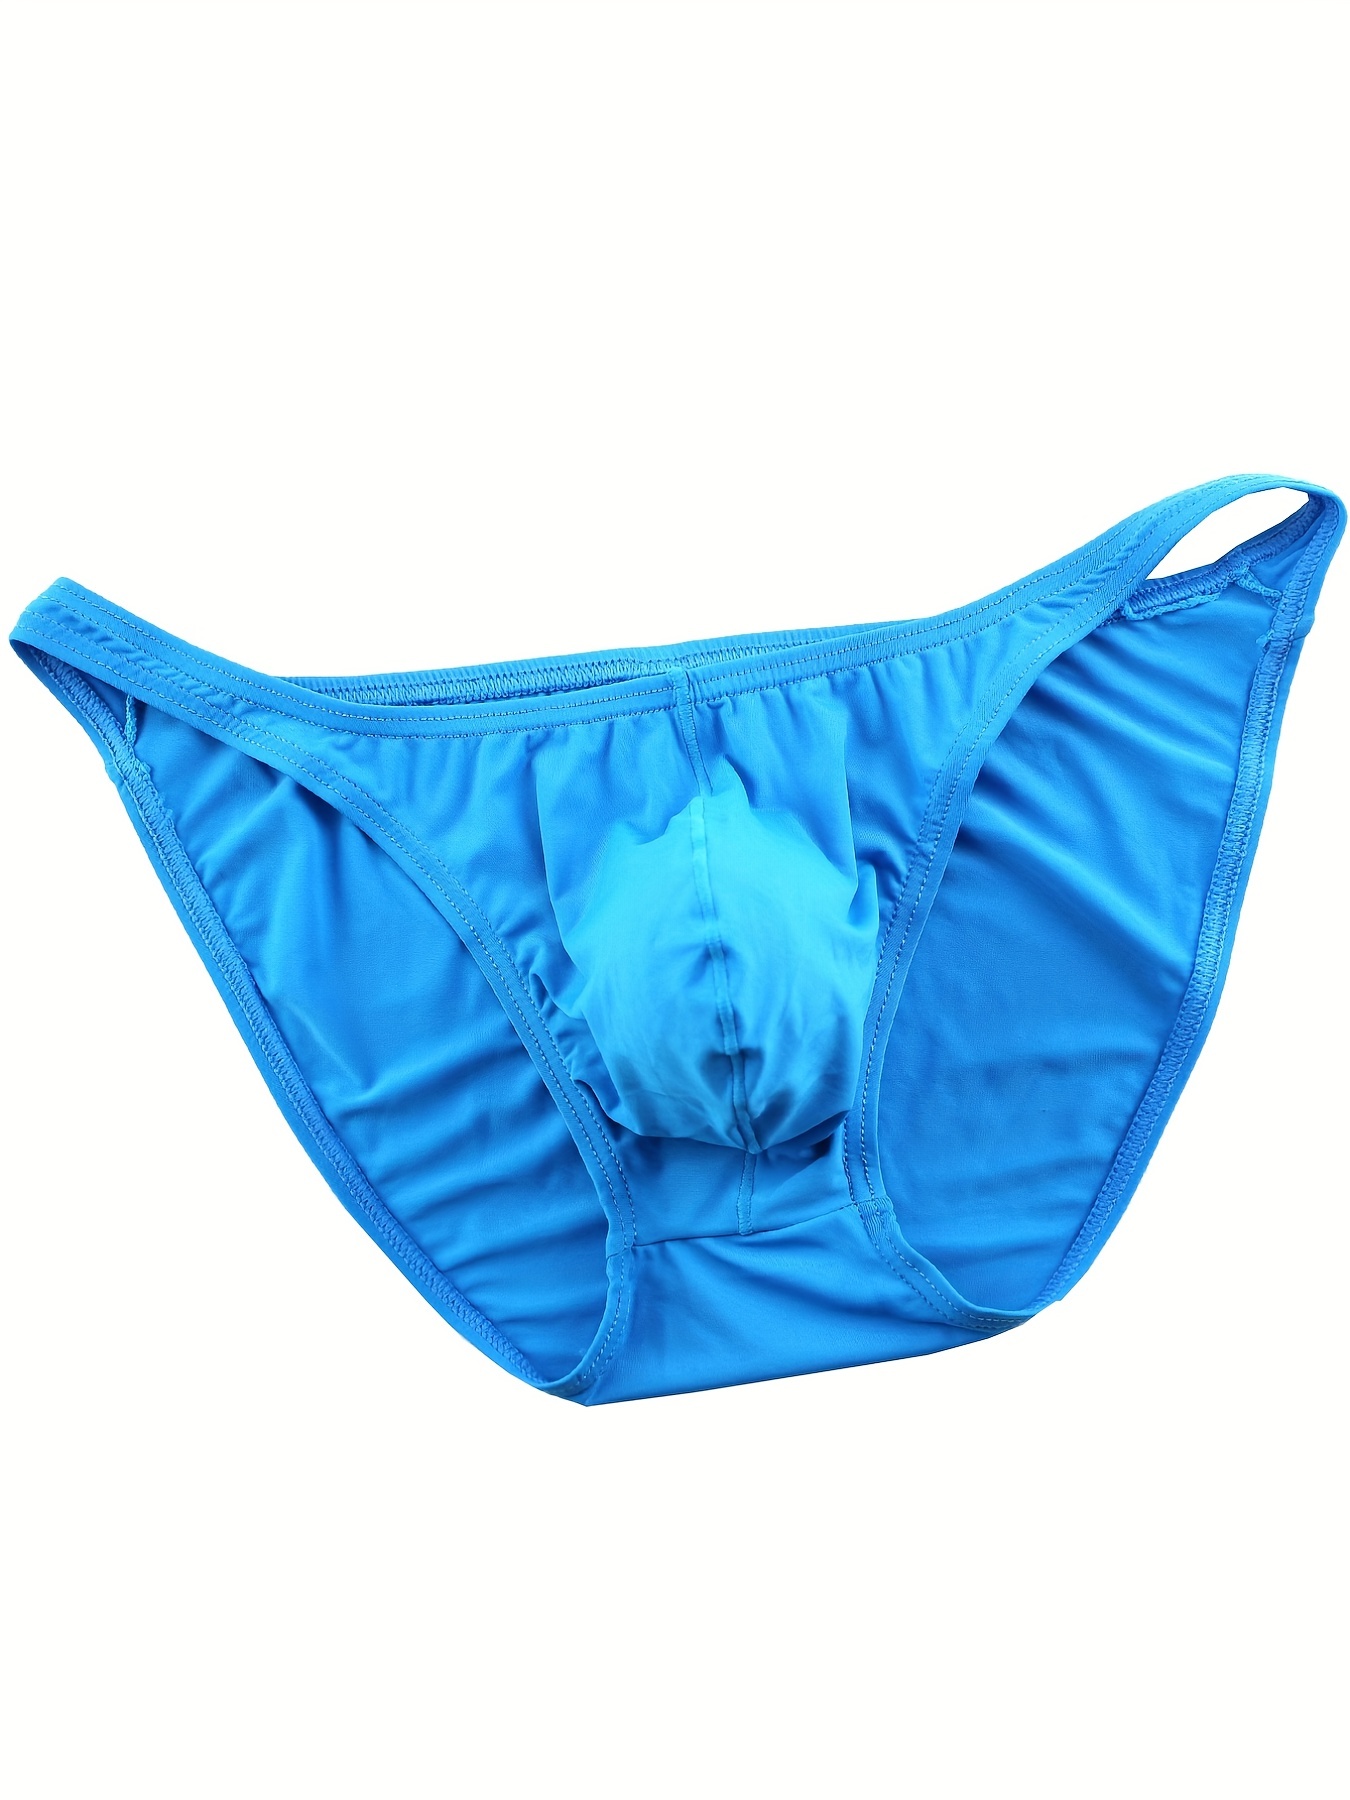 MAOAEAD Men's Ice Silk Underwear, Mens Ice Silk Cool Breathable